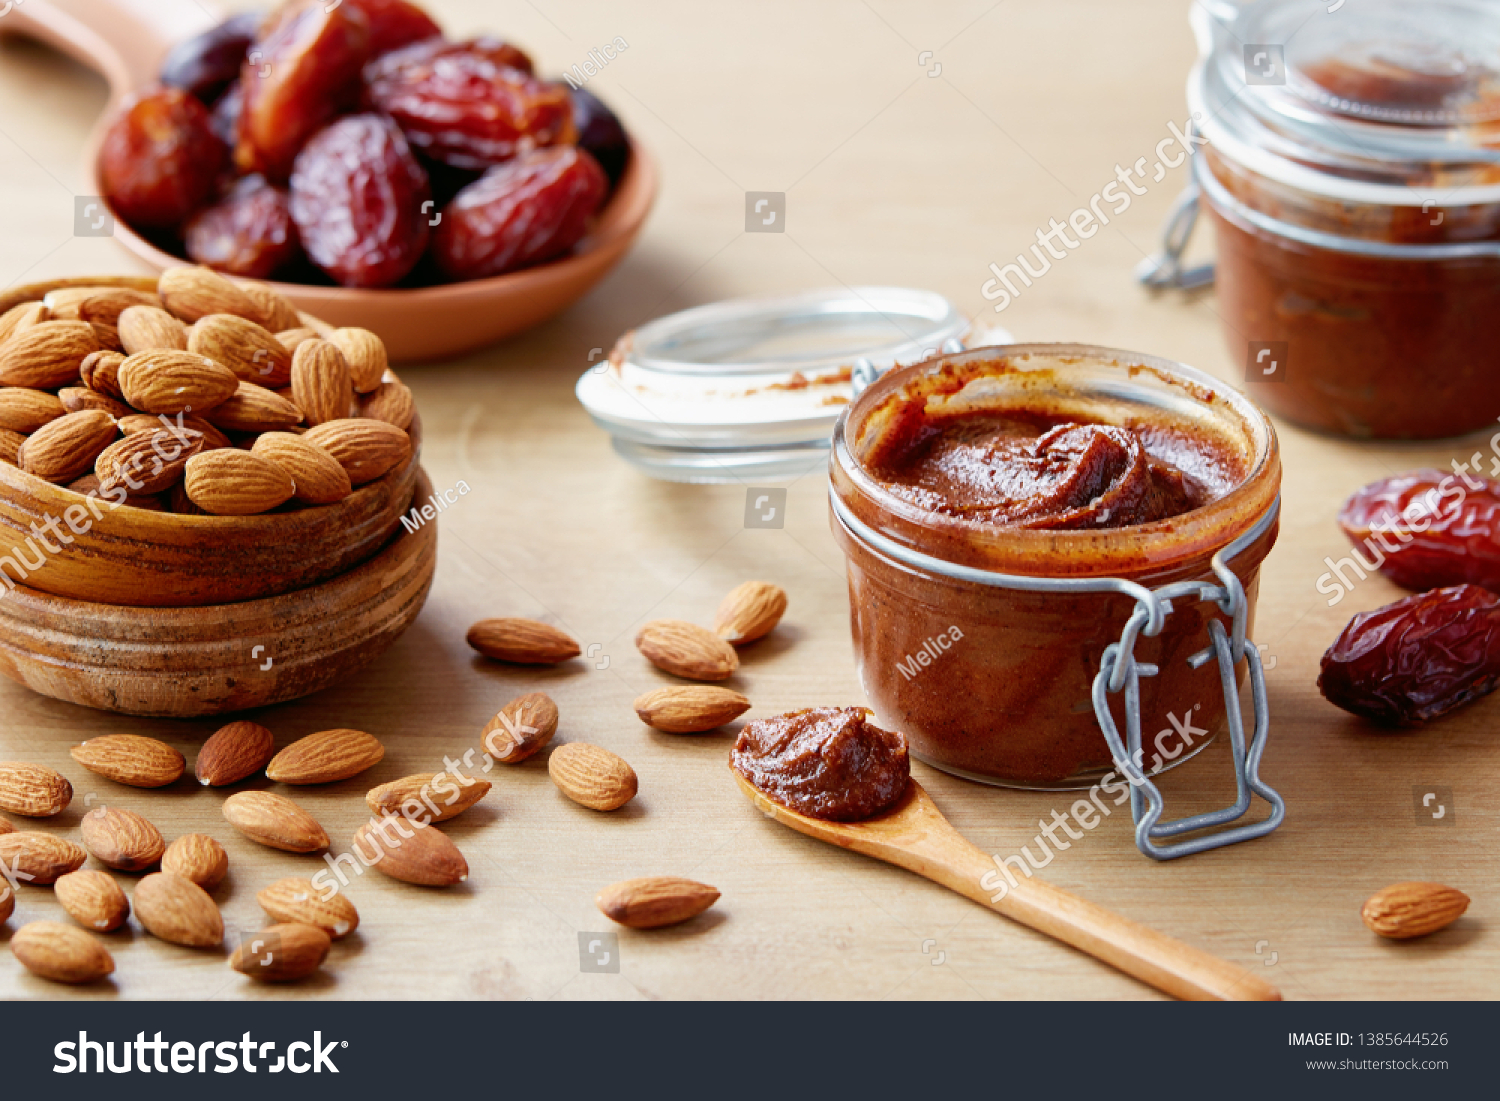 Vegan date spread with almonds (sugar-free). Jar of homemade vegan date spread. #1385644526